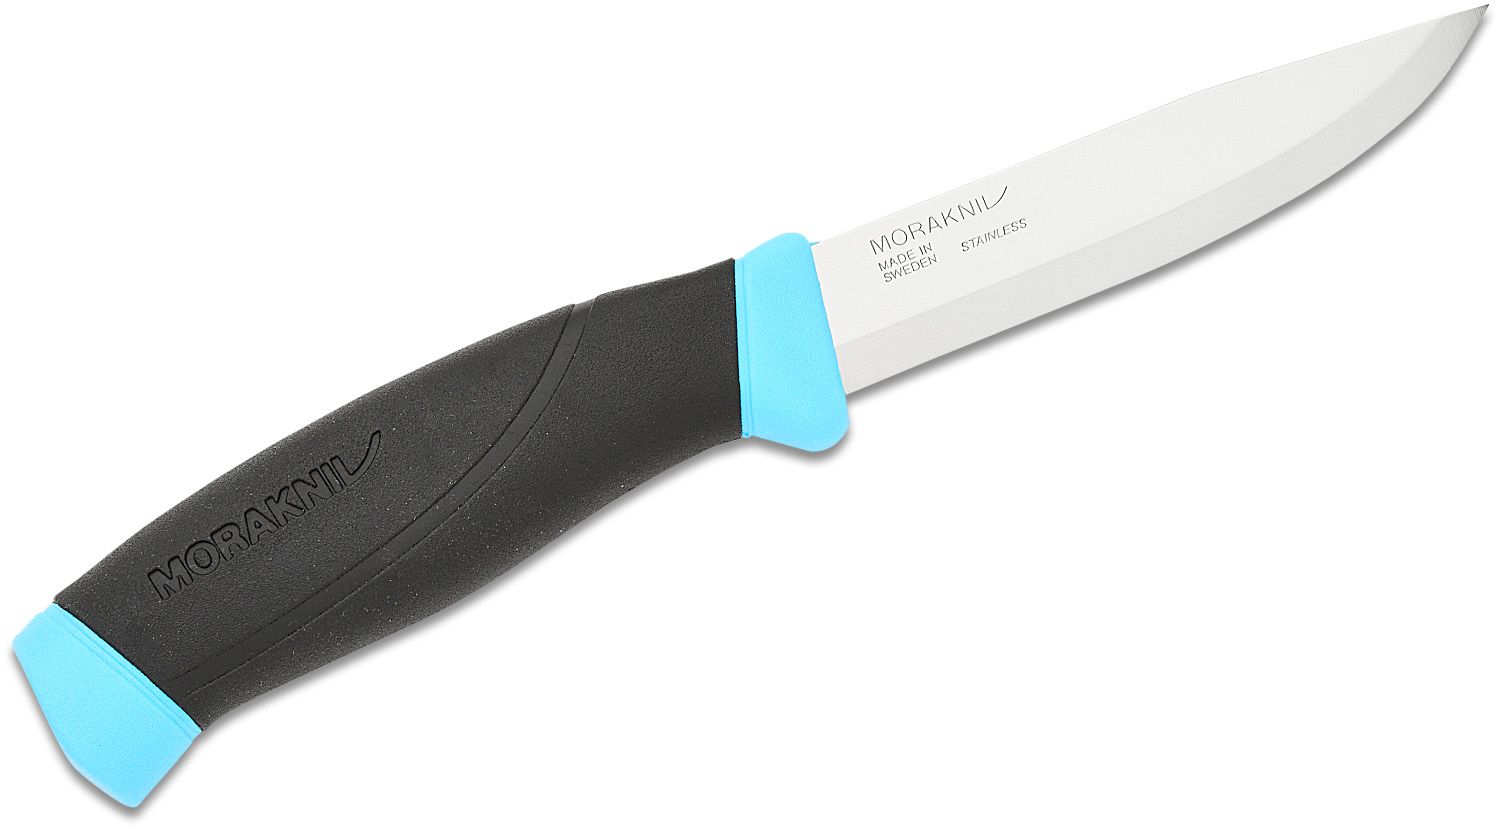 Morakniv Service Knife (S) - Blue